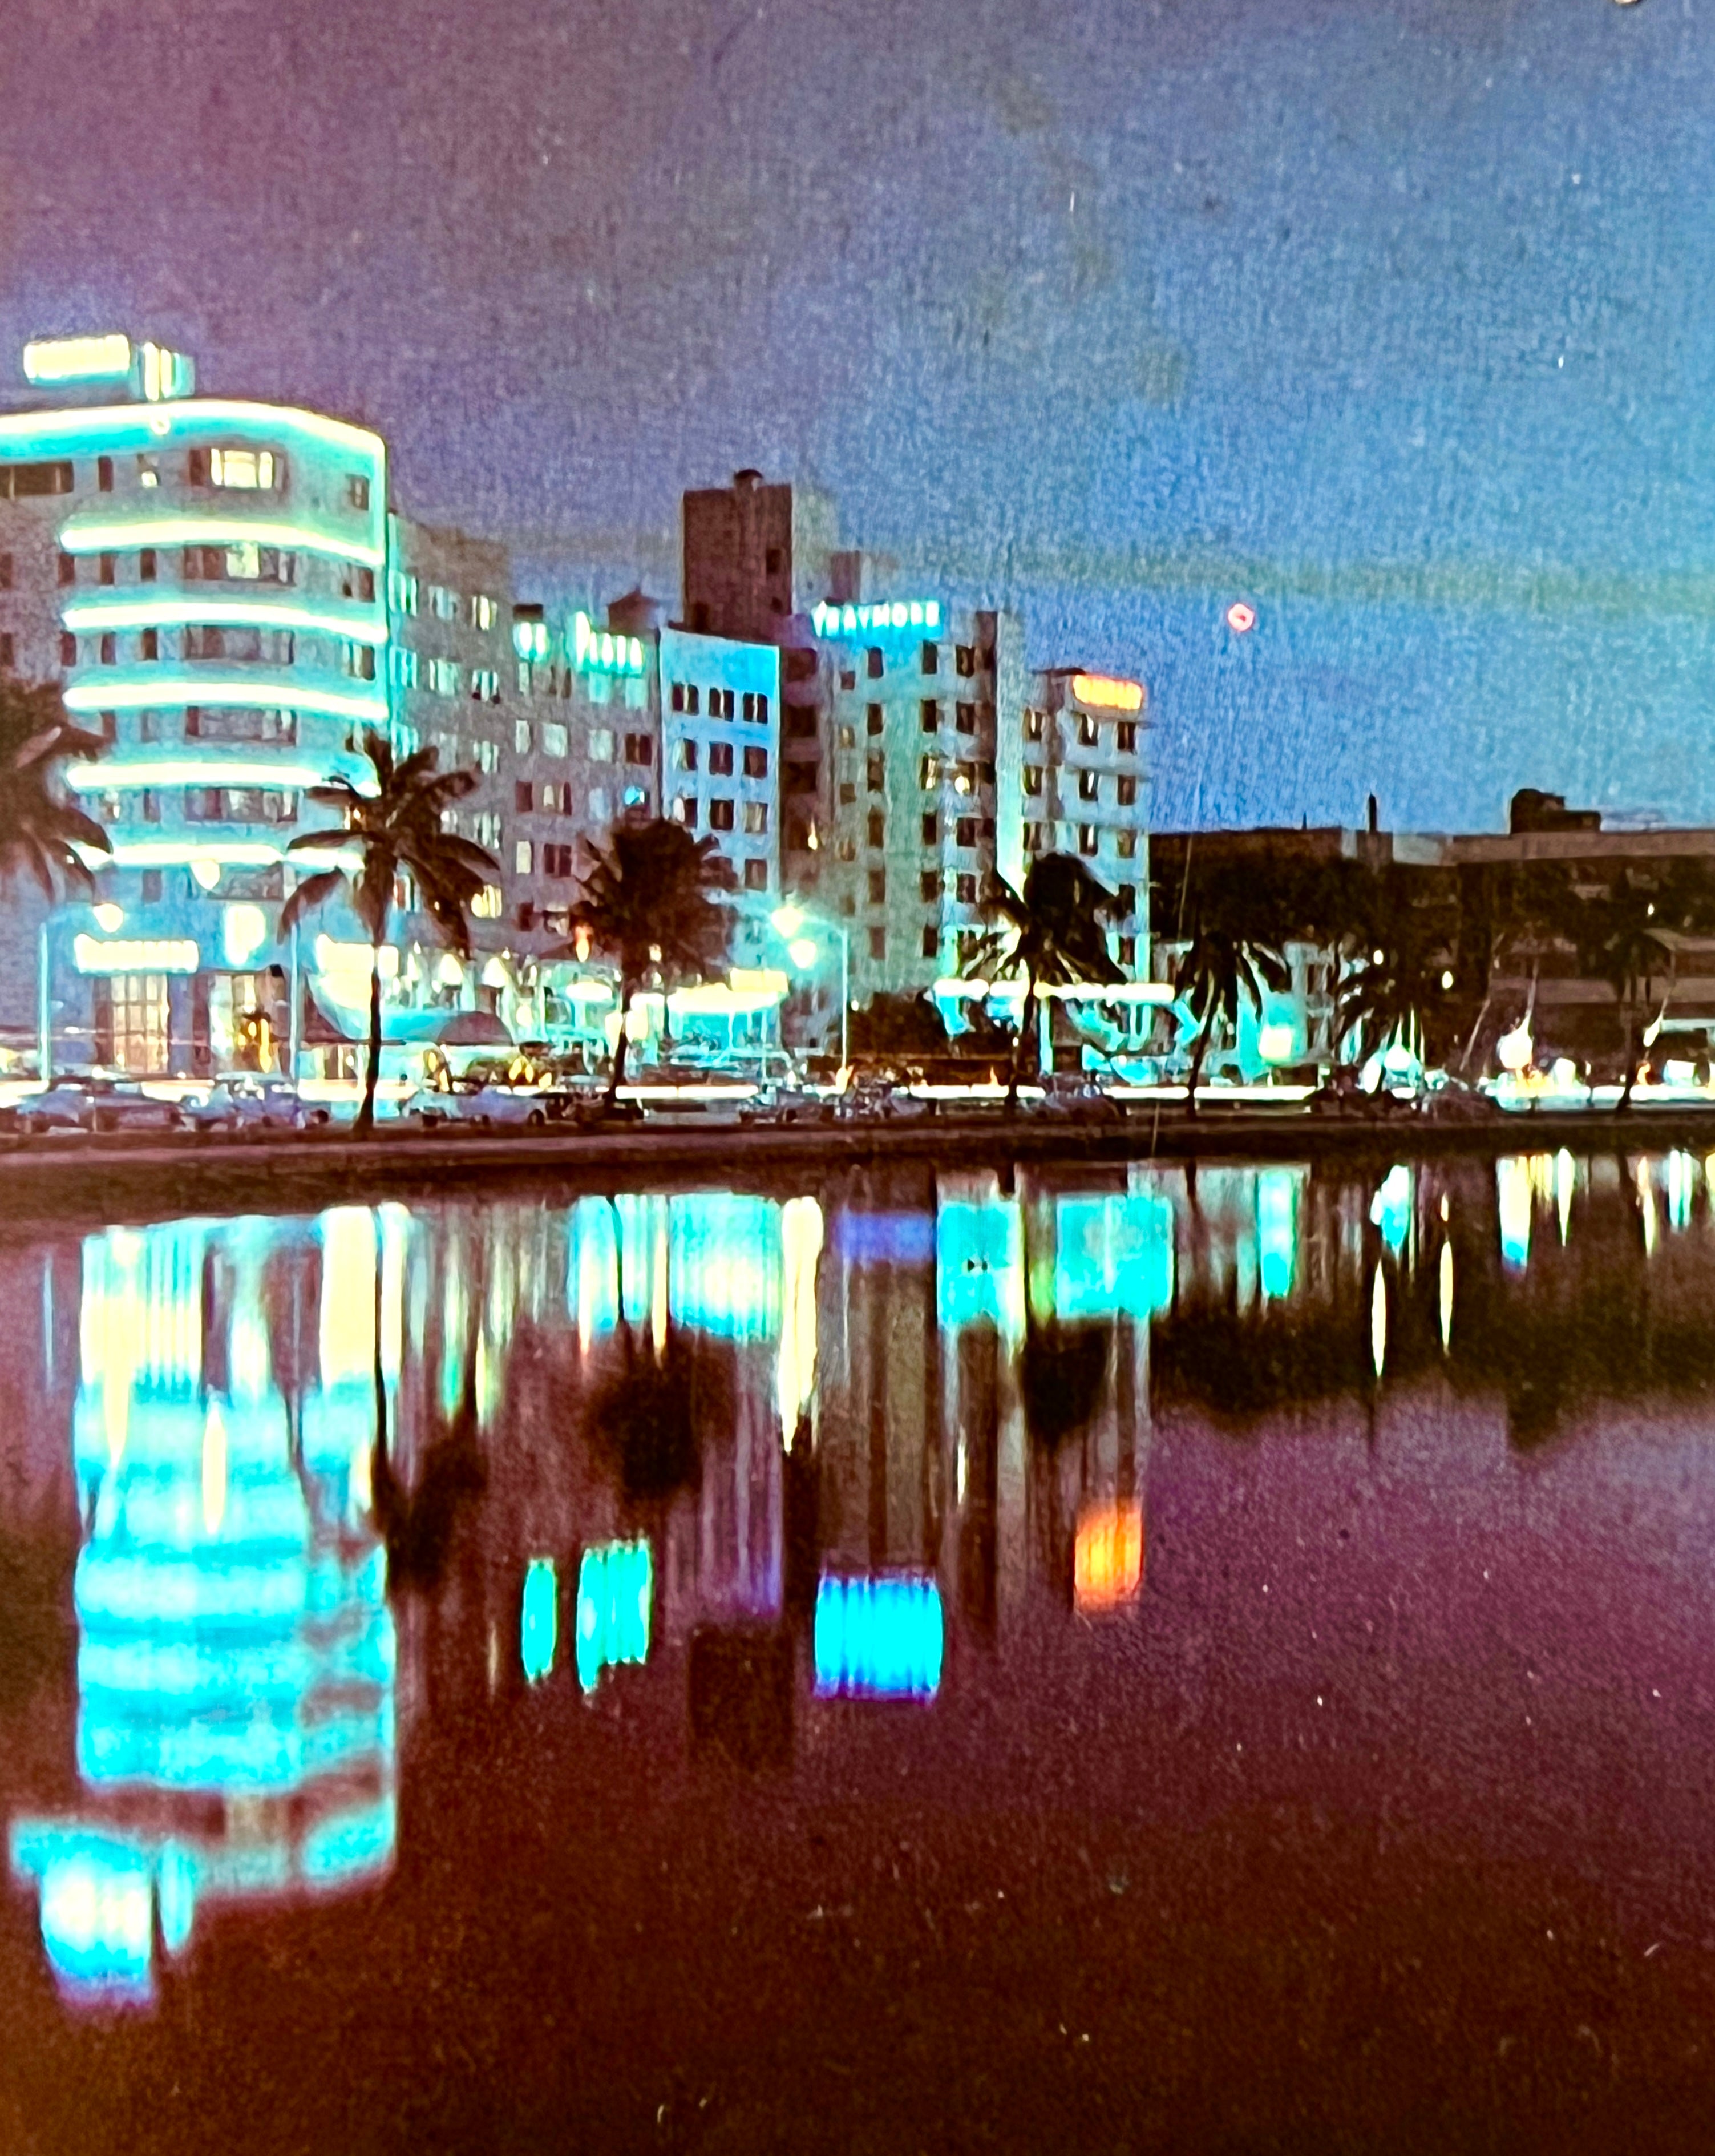 MIAMI BEACH FLORIDA BLUE WATERS HOTEL VINTAGE POSTCARD